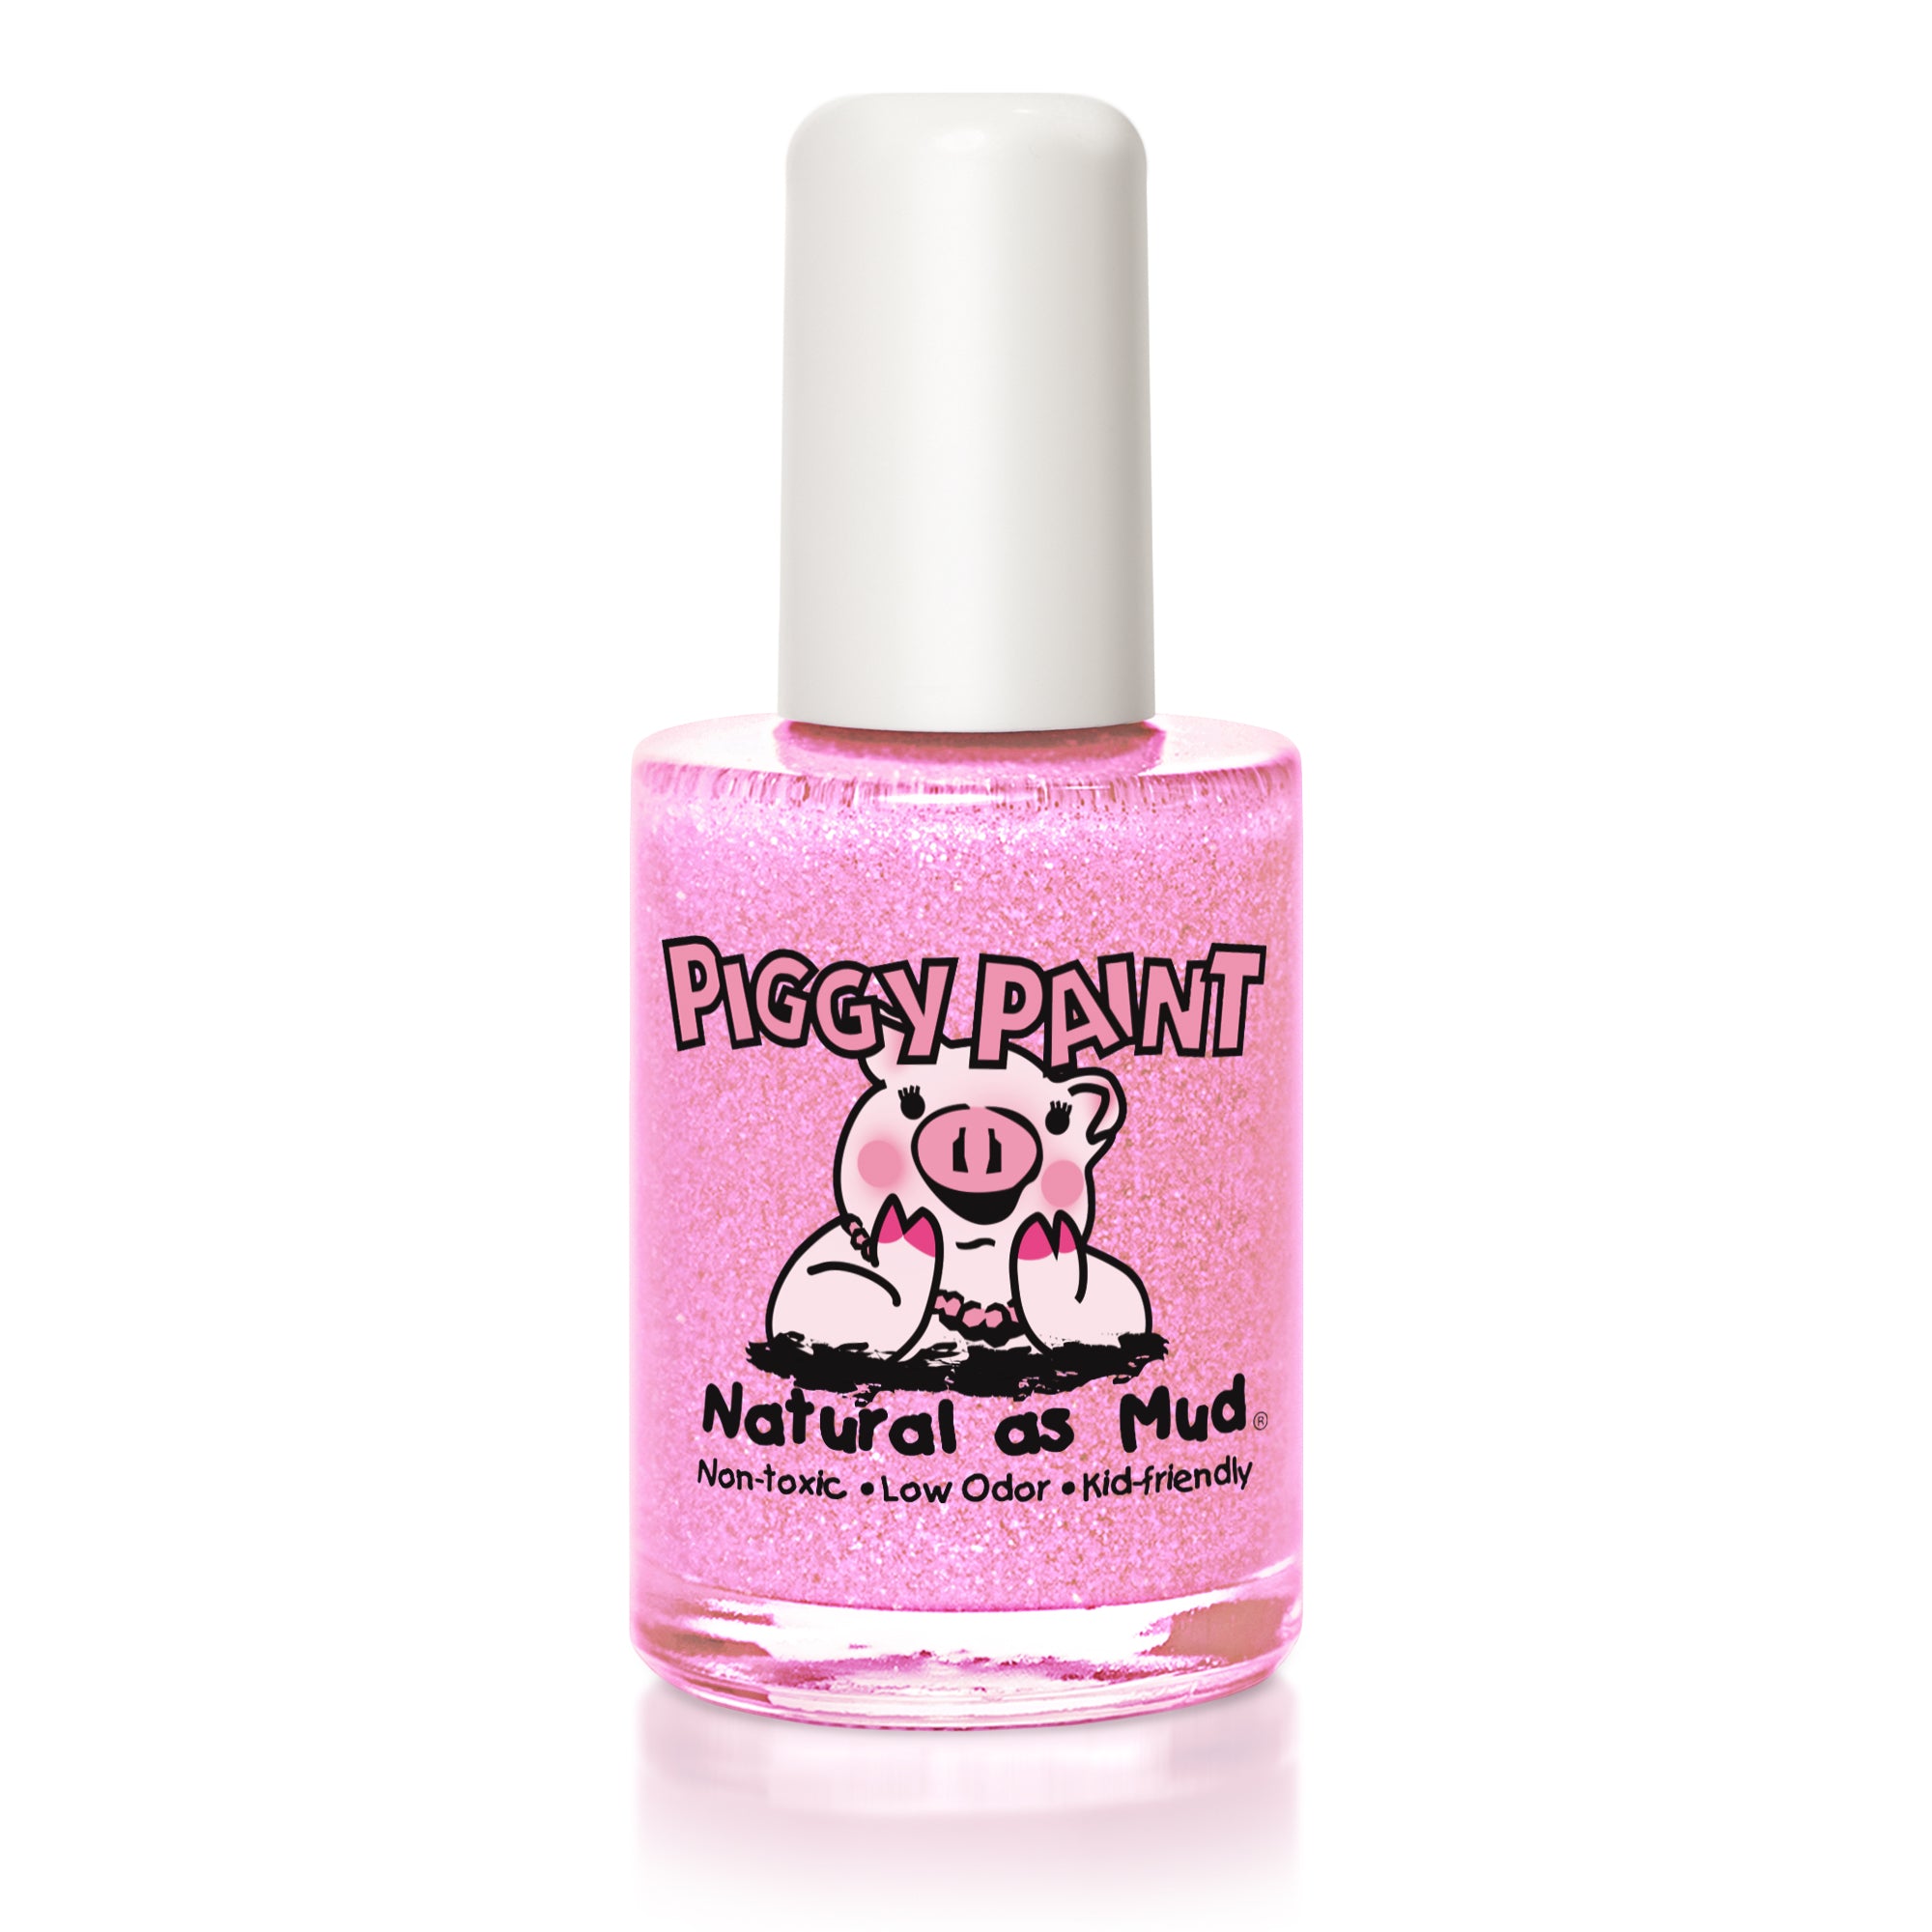 PIGGY PAINT Puppy Paint Natural as Mud Nail Polish, Pink, 0.5-oz bottle 